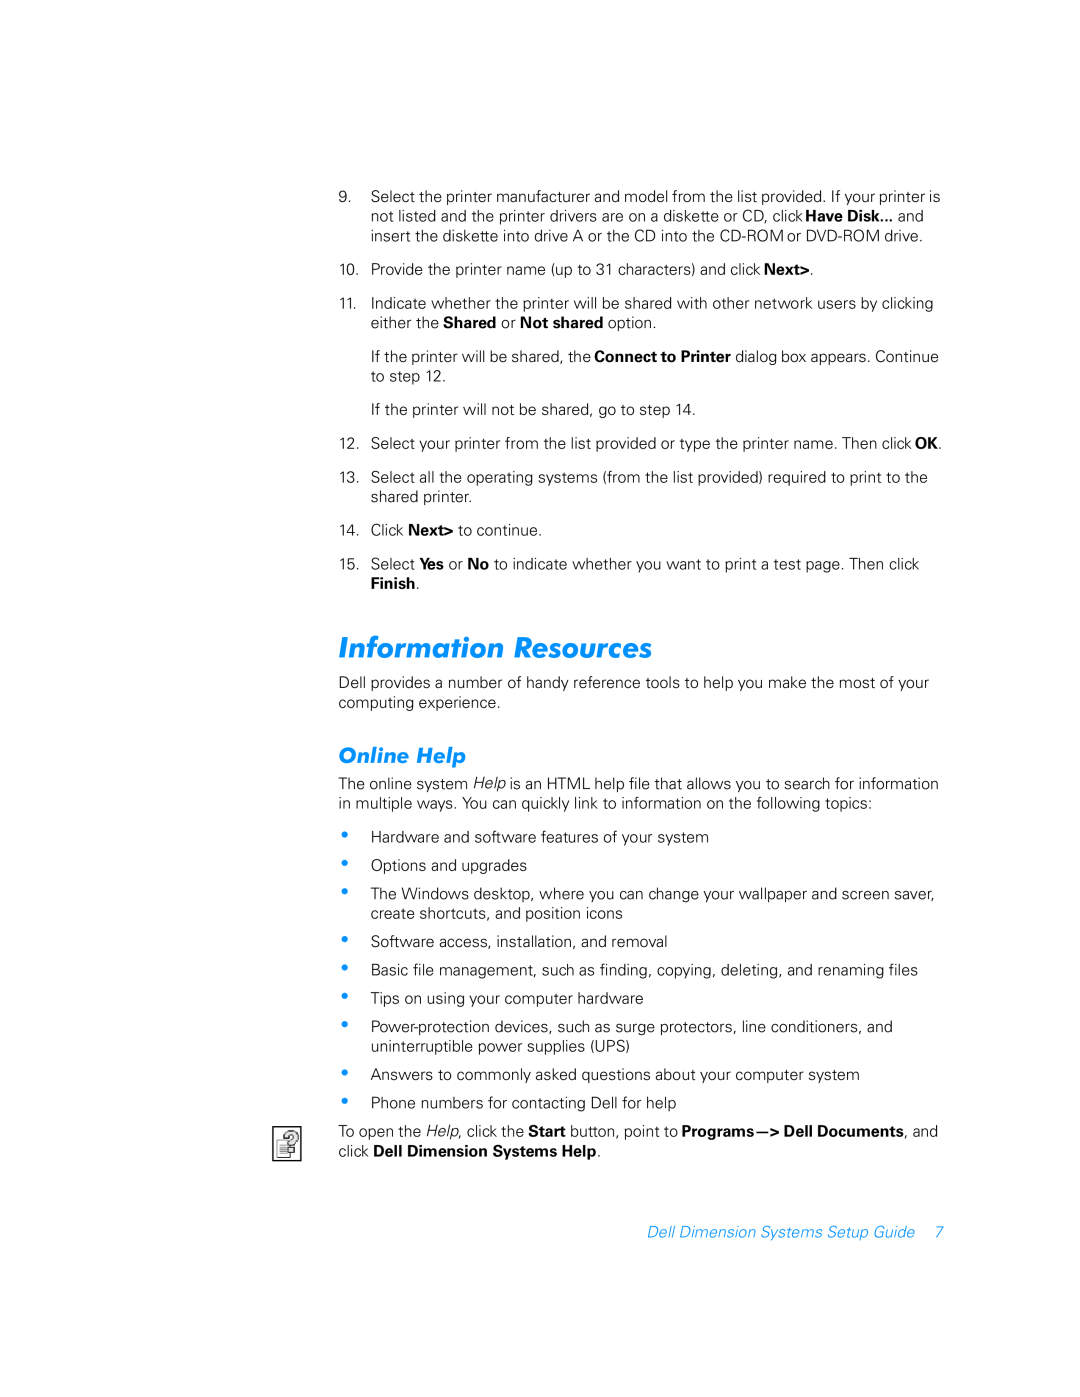 Dell Lxxxc manual QIRUPDWLRQ5HVRXUFHV, 2QOLQH+HOS, Dell Dimension Systems Setup Guide 